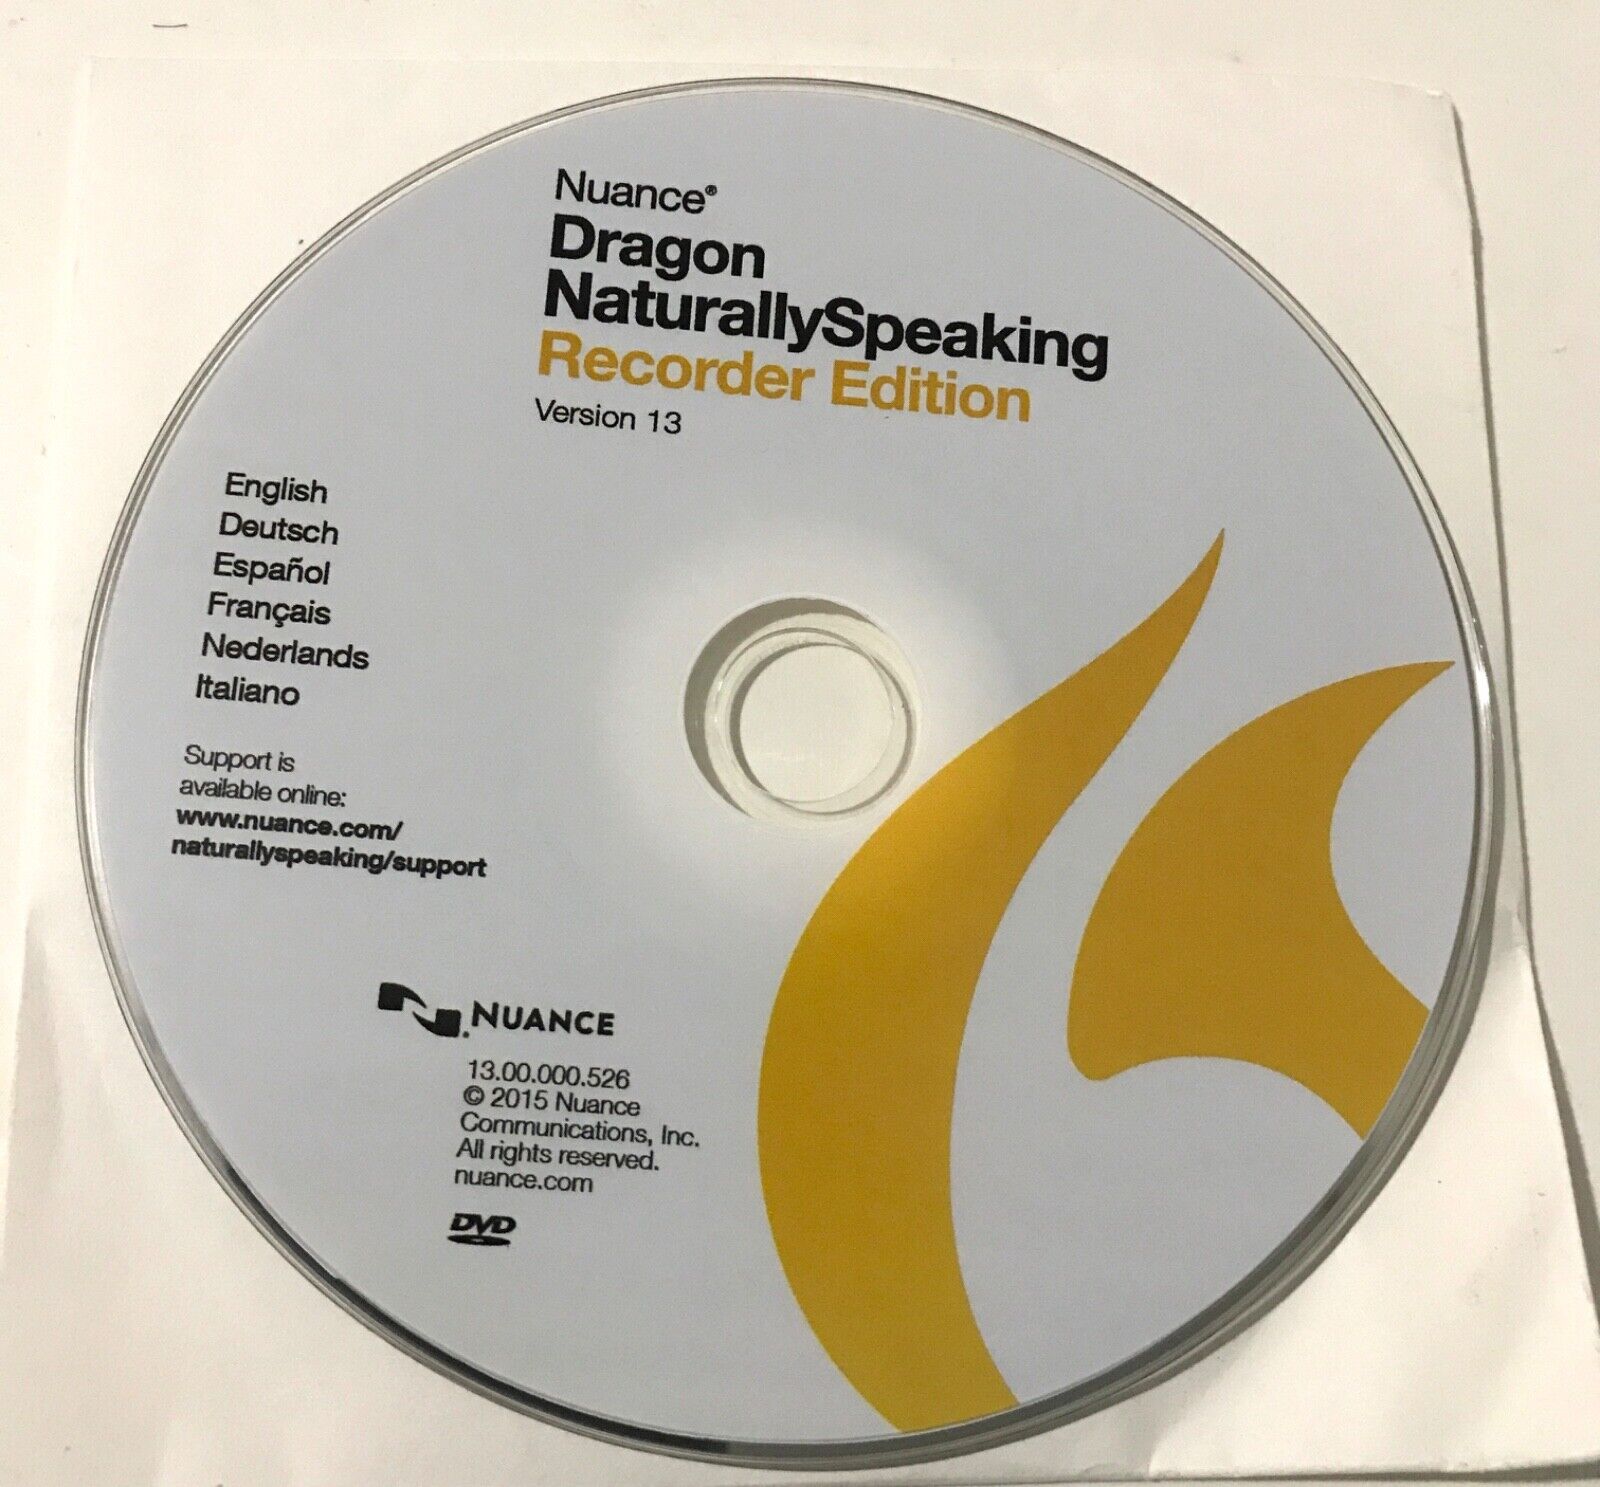 Dragon NaturallySpeaking Recorder Edition 13